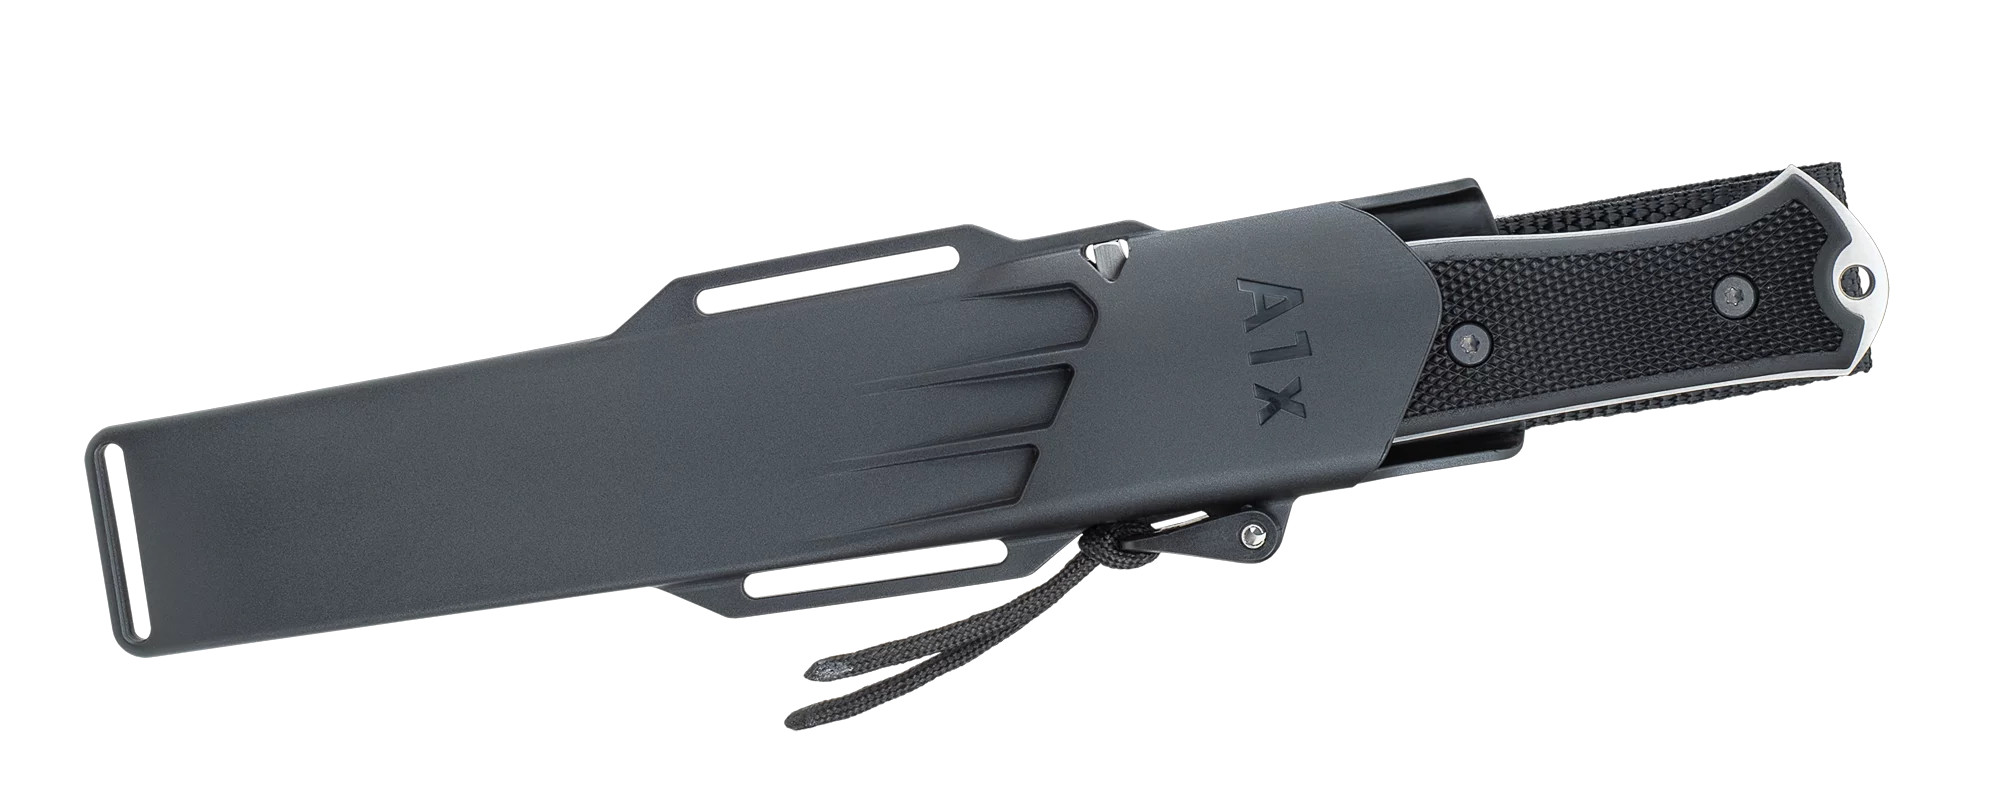 Fallkniven A1X Survival Knife – Laminated CoS Steel w/ Sheath | Fallkniven